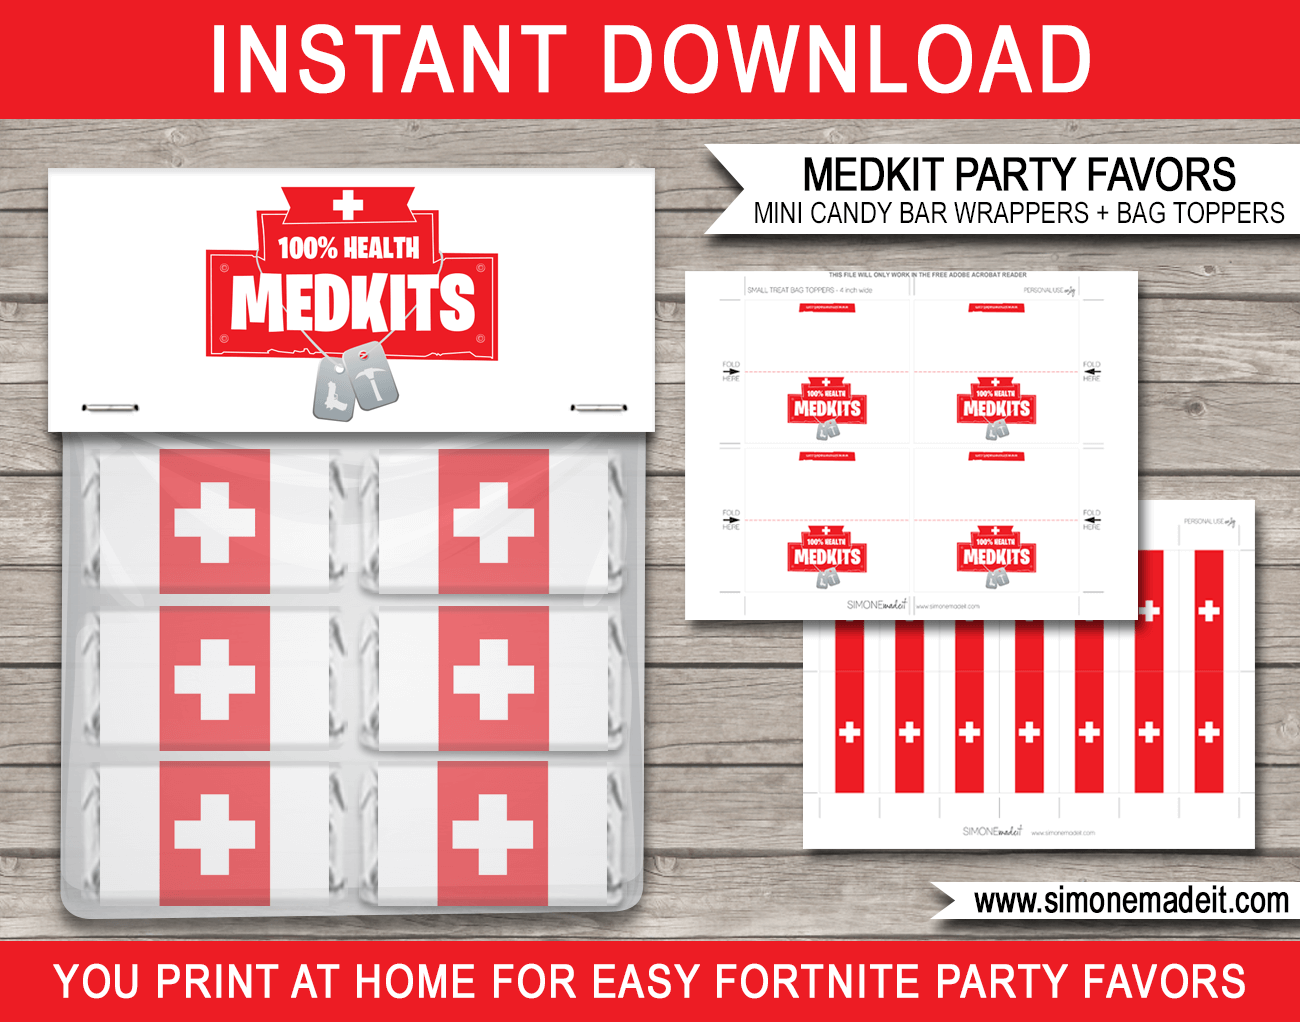 Fortnite Medkit Printable Party Favors Medkit Mini Candy Bar - fortnite medkit party favors bag toppers mini candy bar wrappers